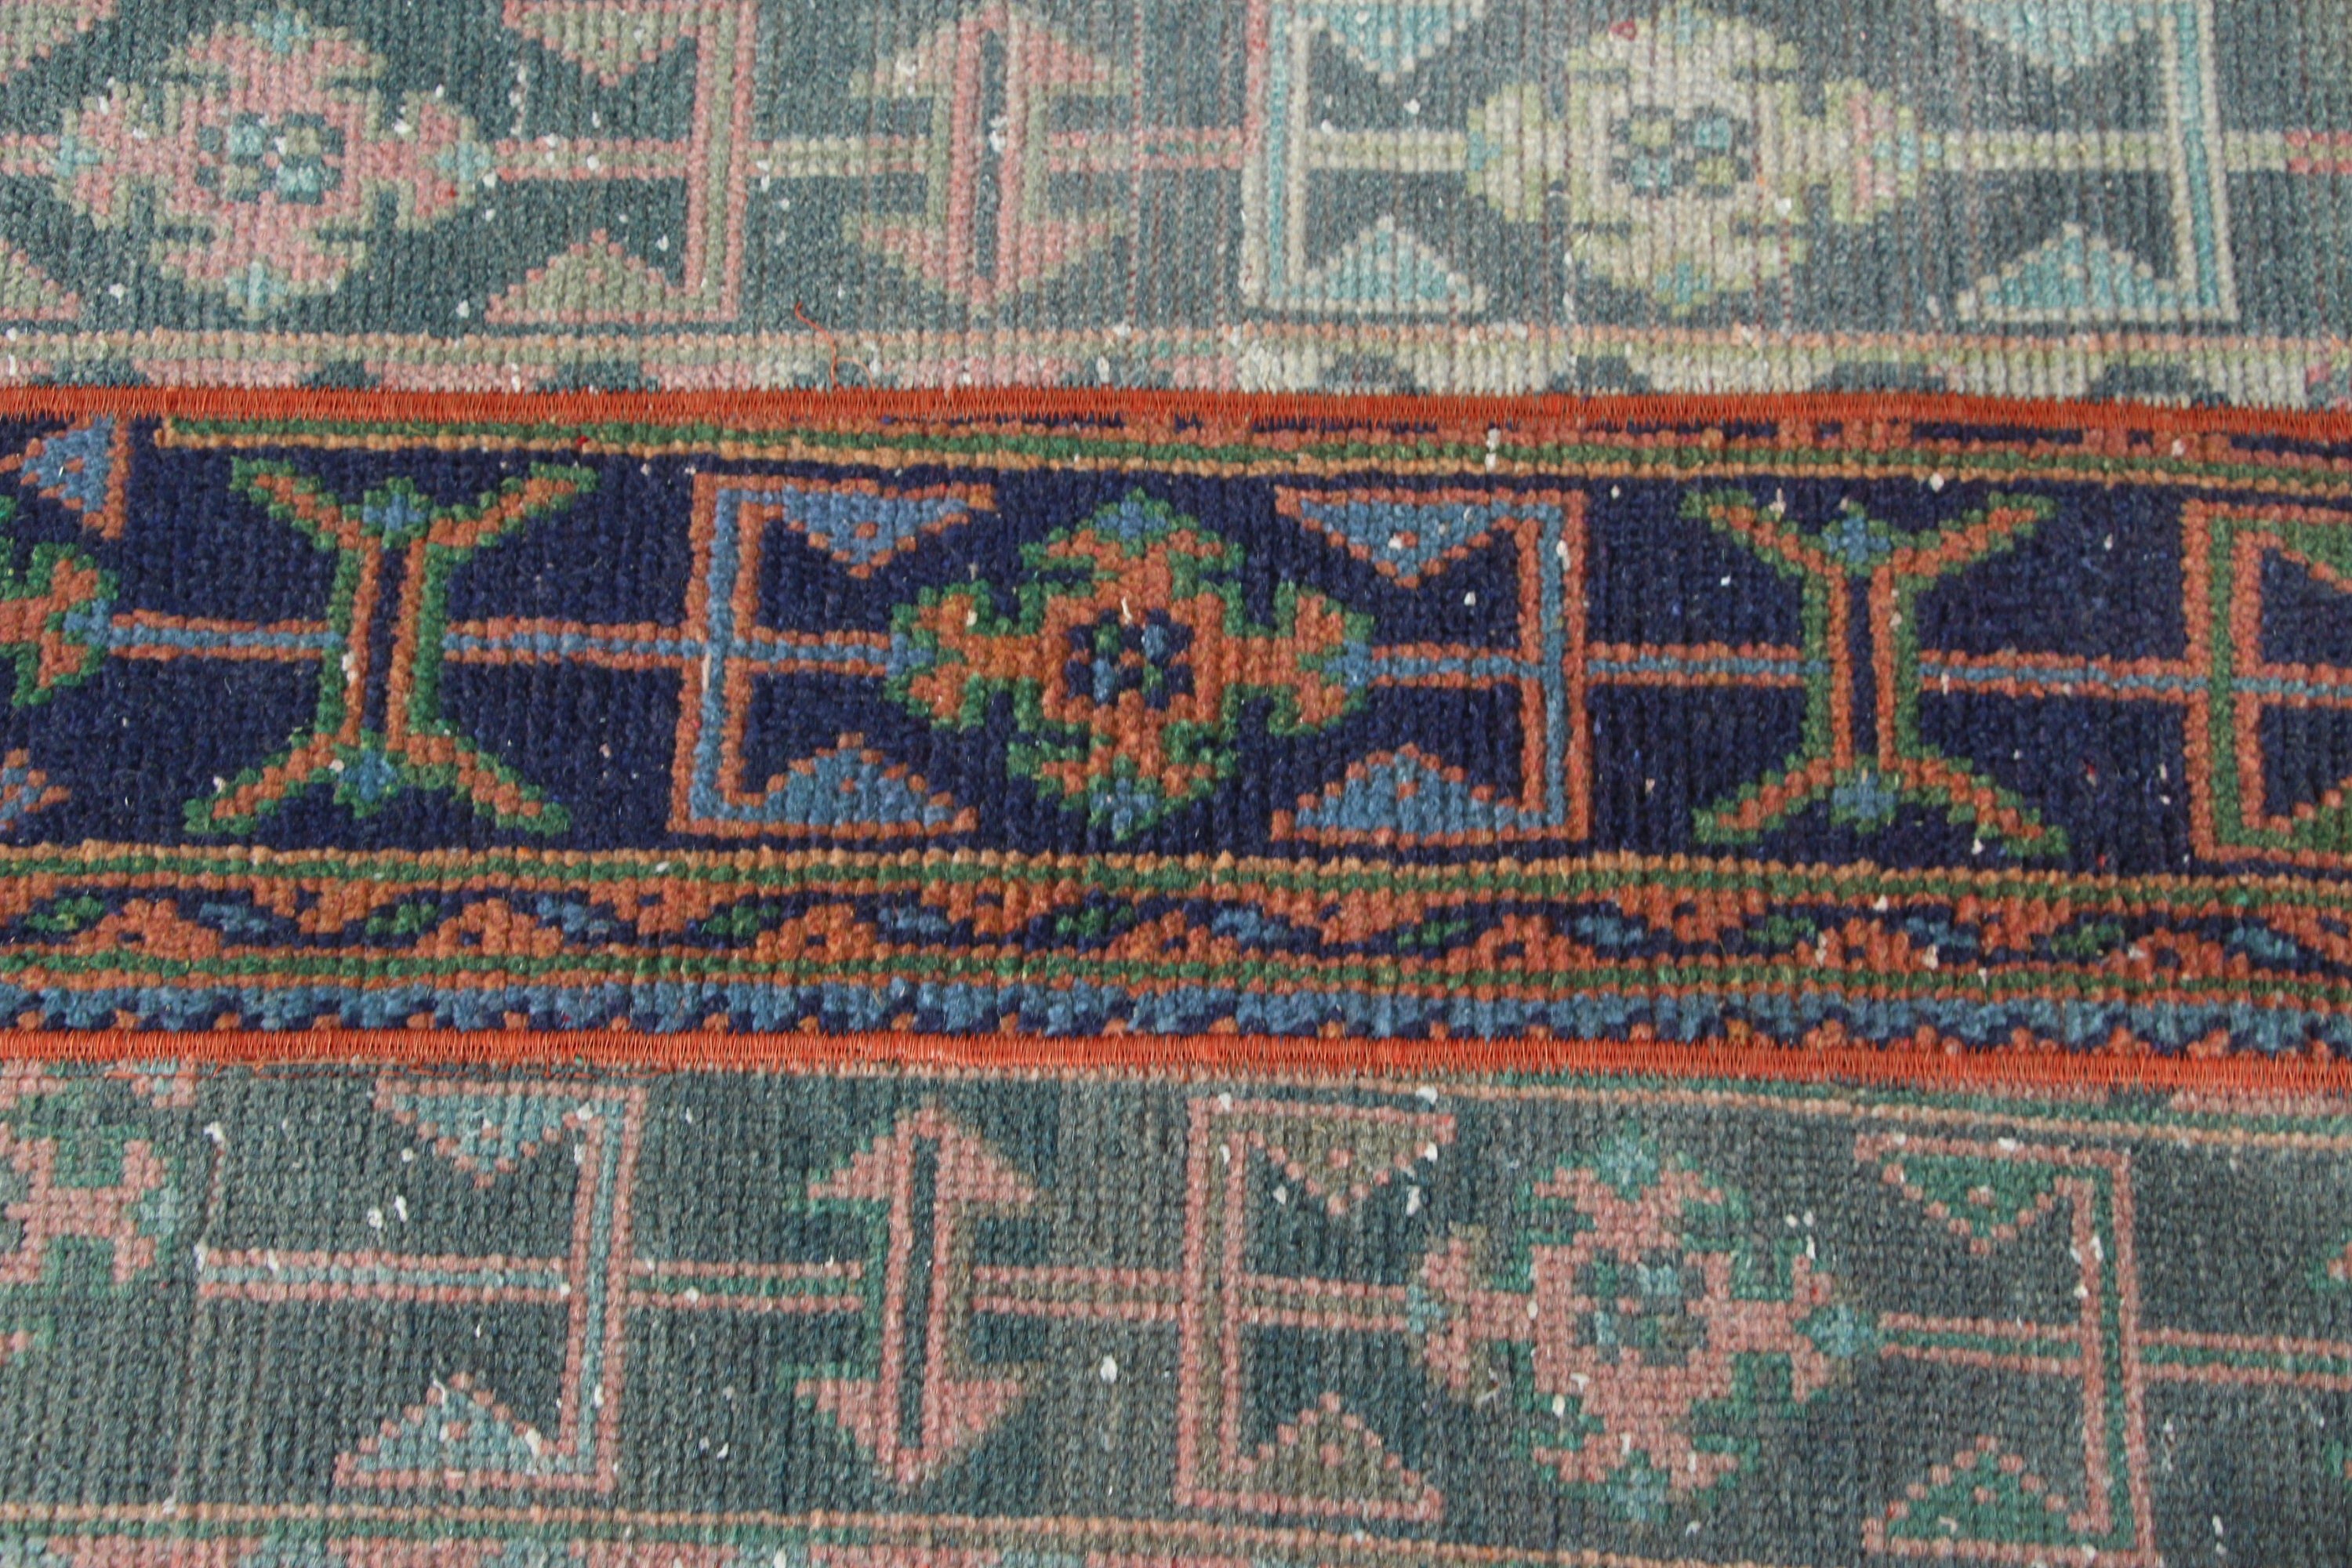 Vintage Rugs, Bath Rug, Antique Rug, 2.1x3.3 ft Small Rug, Cute Rug, Moroccan Rug, Blue Bedroom Rugs, Turkish Rugs, Wall Hanging Rug